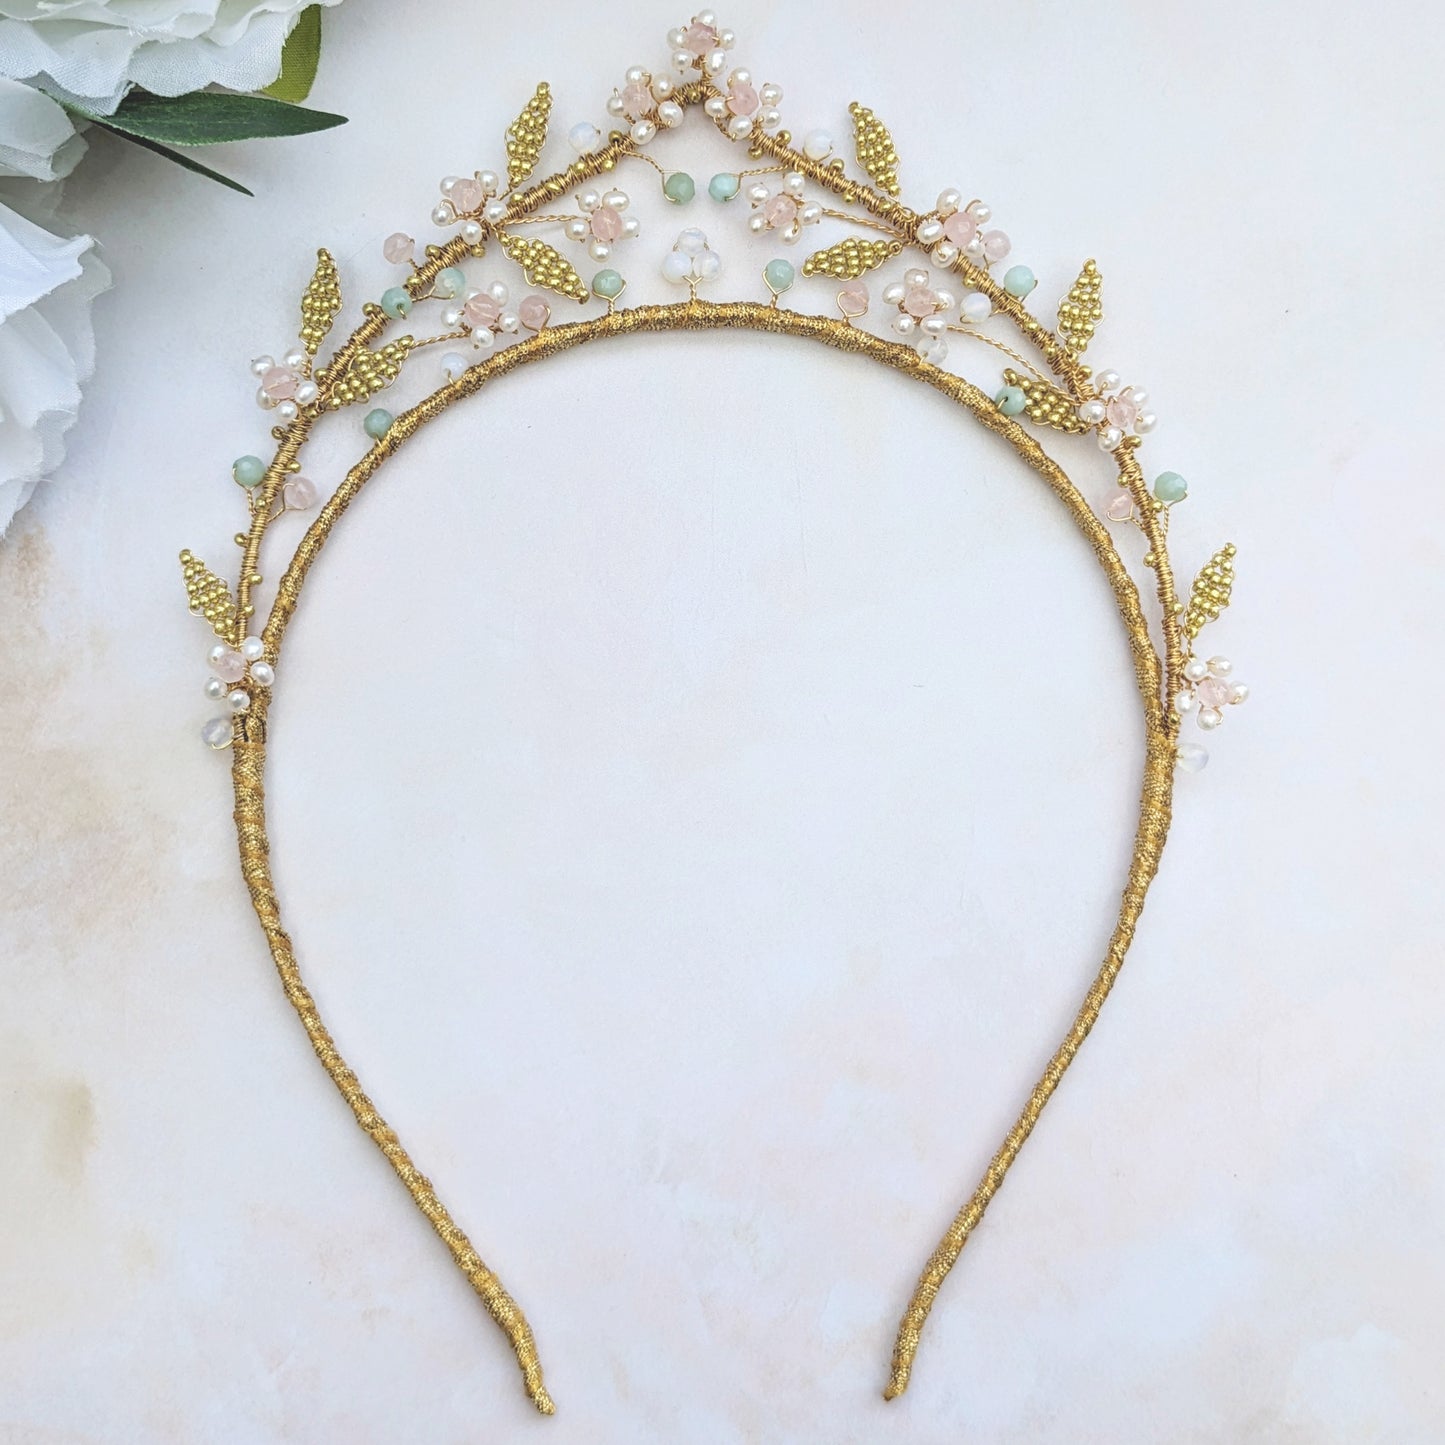 botanical tiara for weddings - Susie Warner